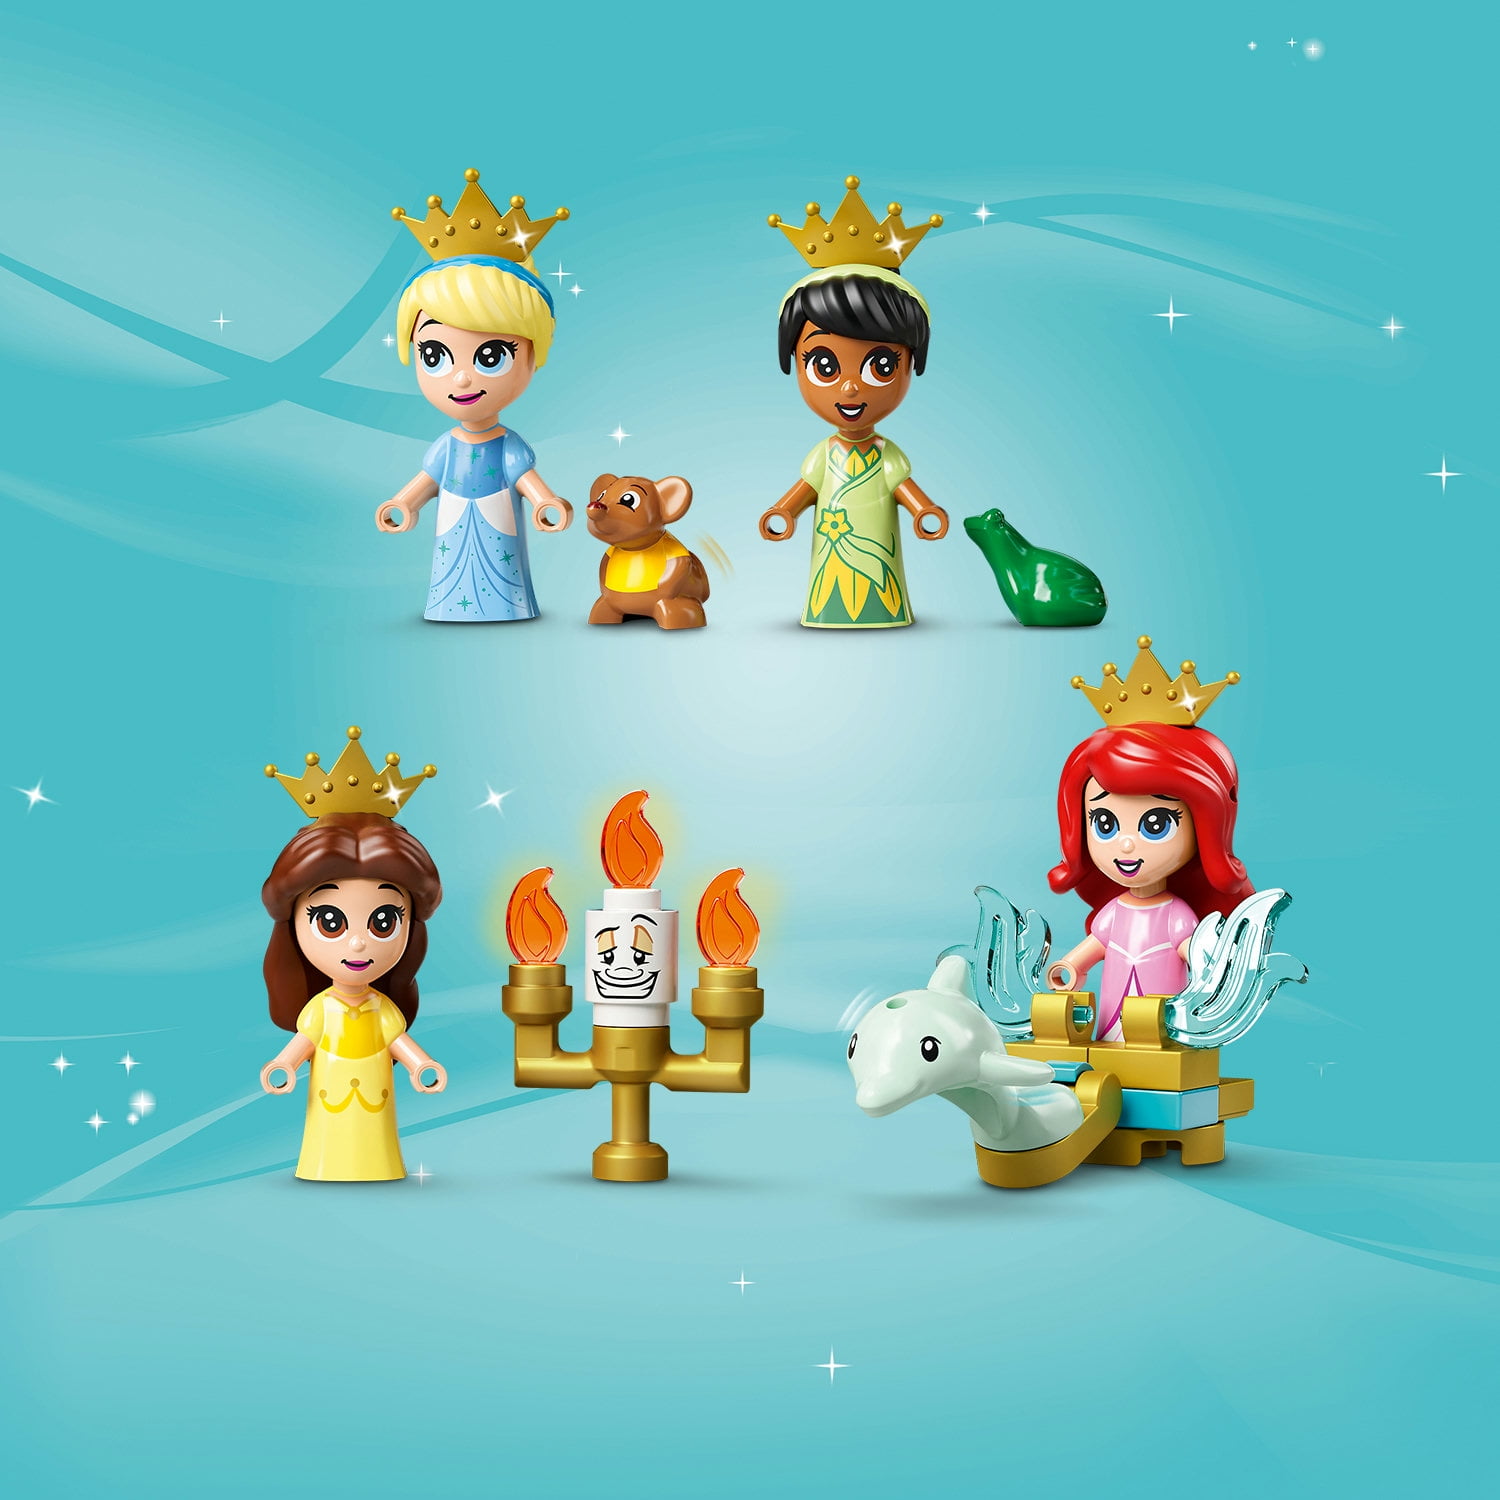 Lego Eventyrboken 43193 - Om Ariel, Belle, Askepott og Tiana